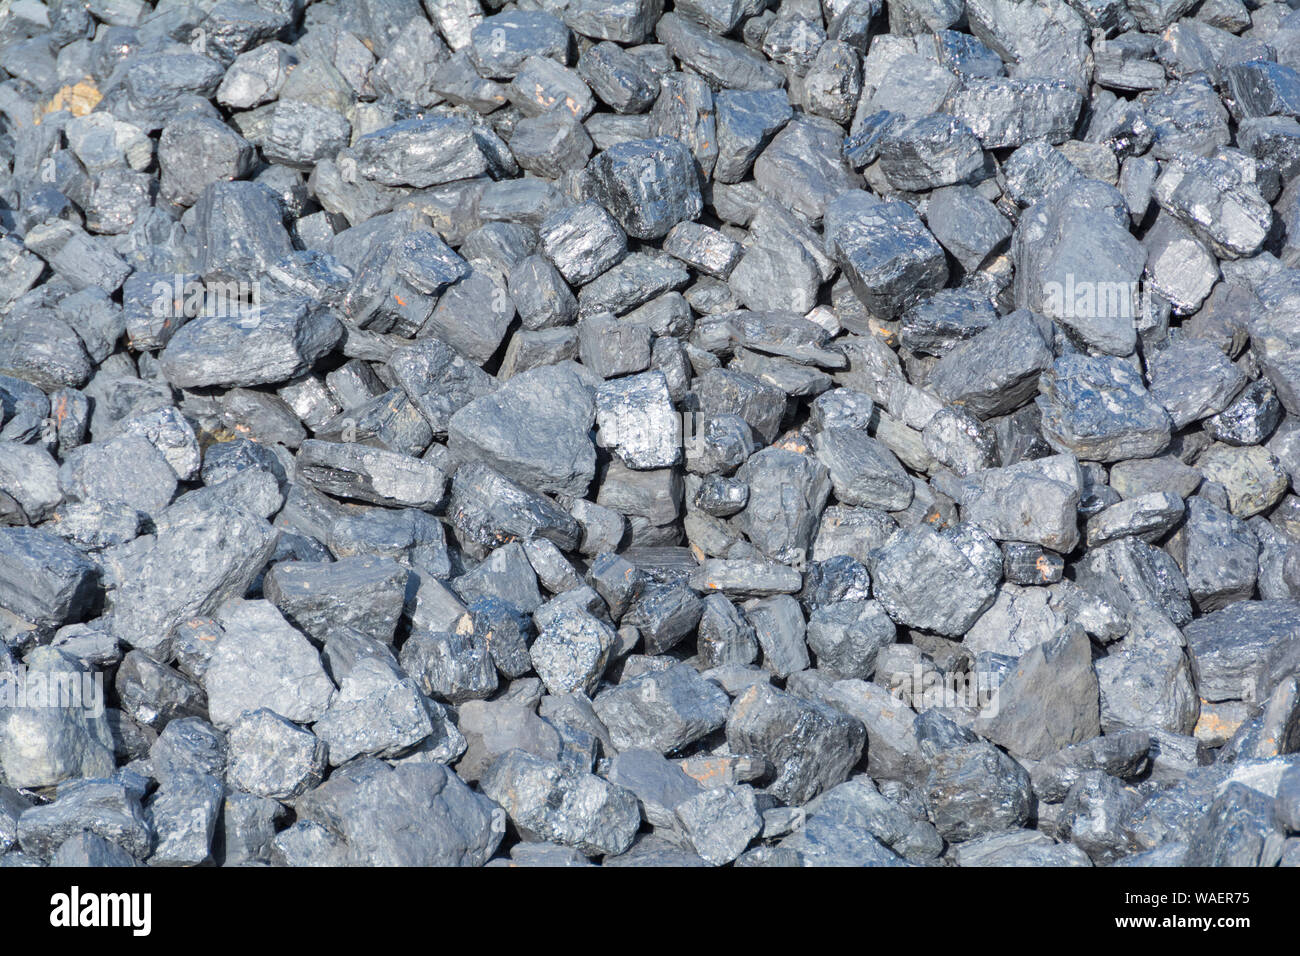 A large heap of coal alongside a railway siding in the UK Stock Photo